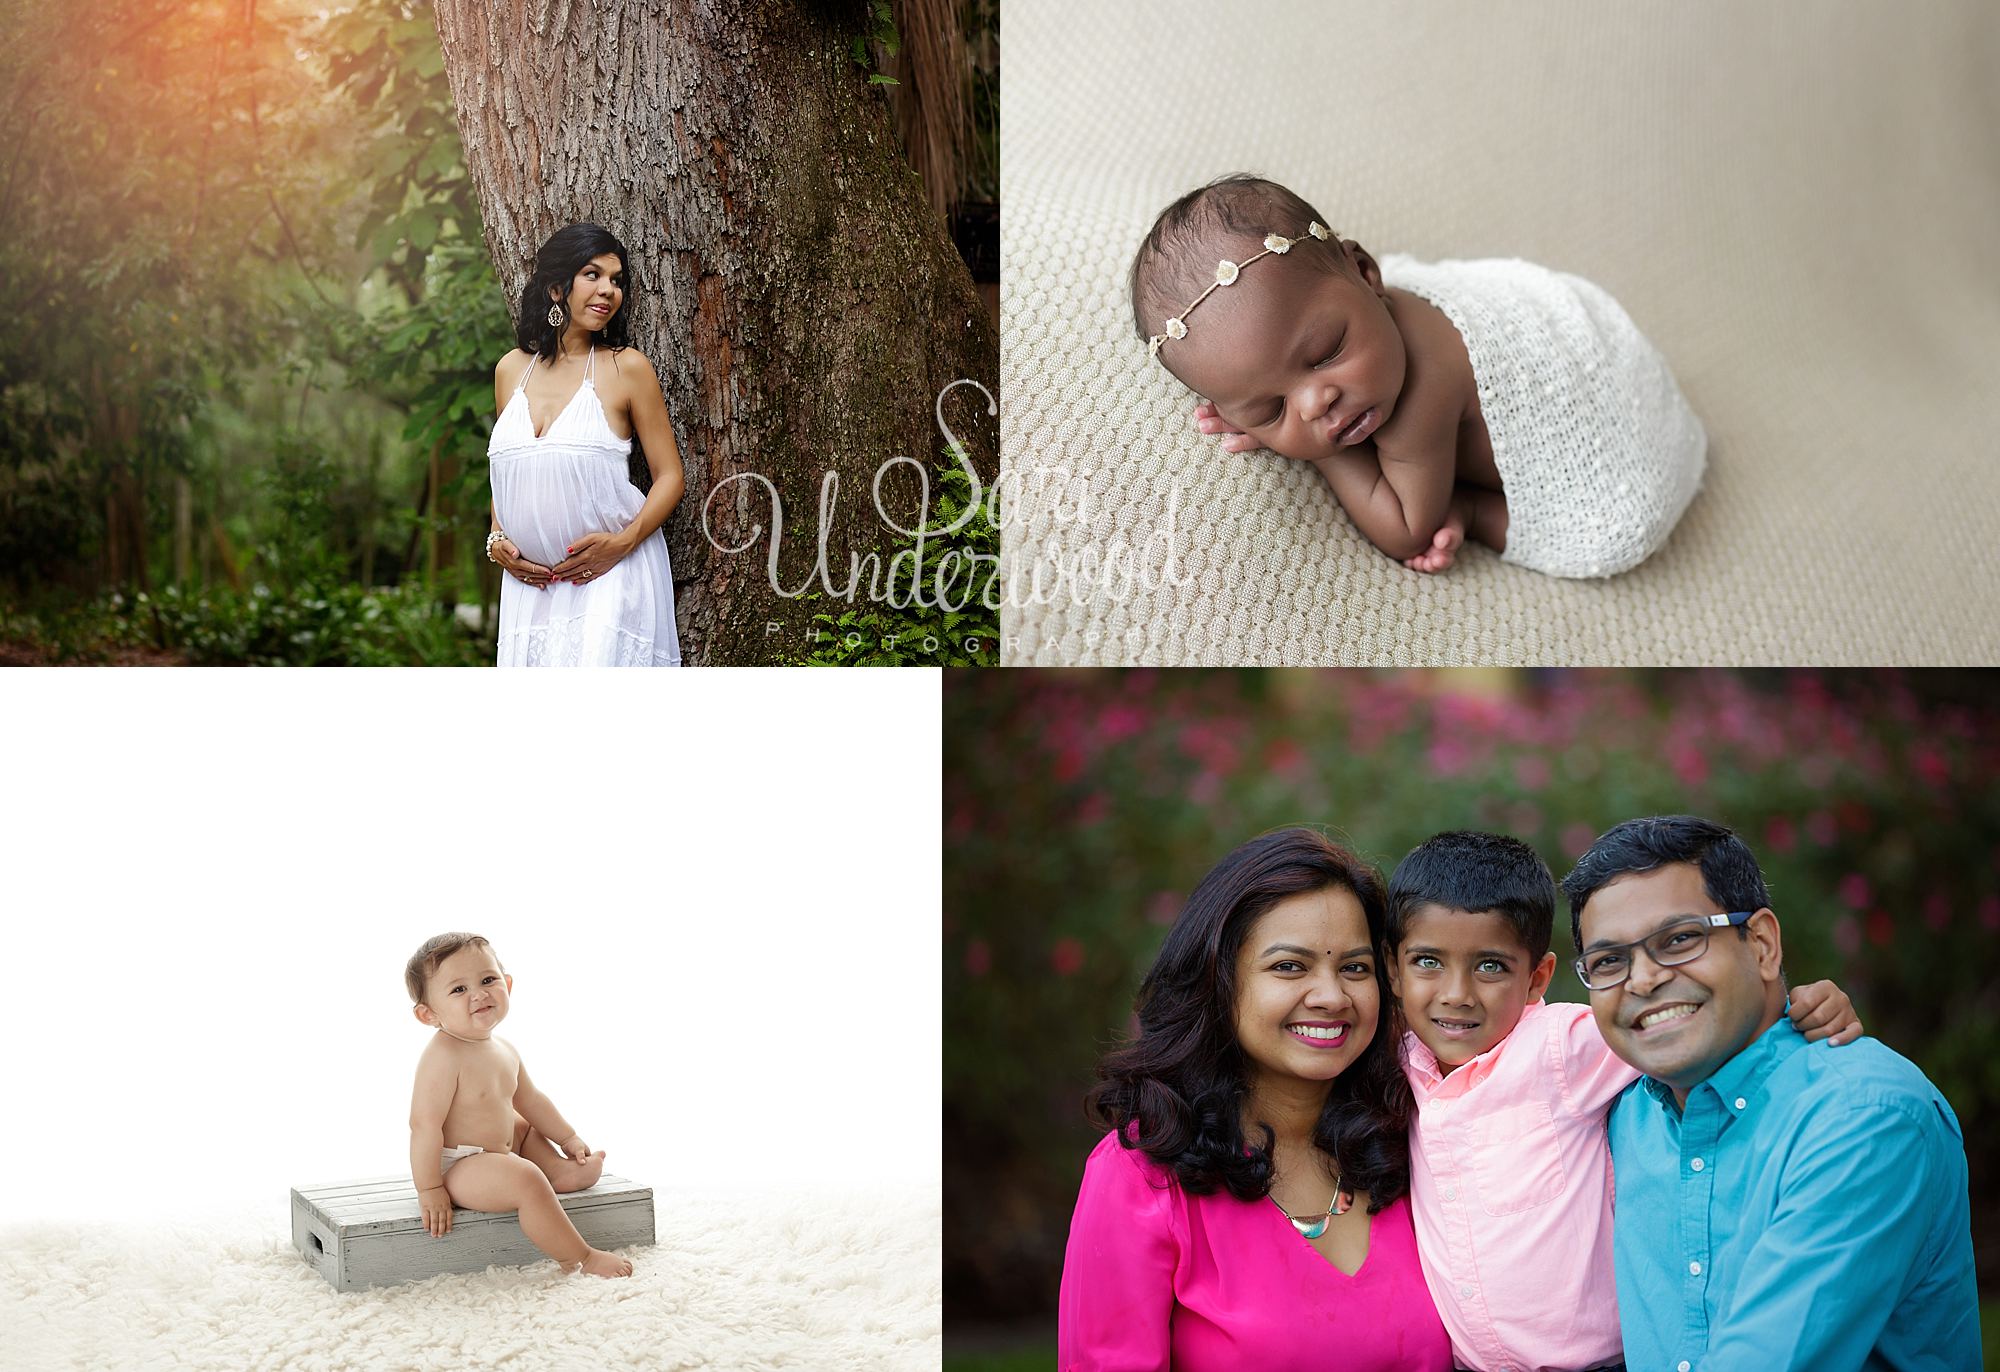 Orlando newborn baby photographer | Double Dollar Gift Certificates are back